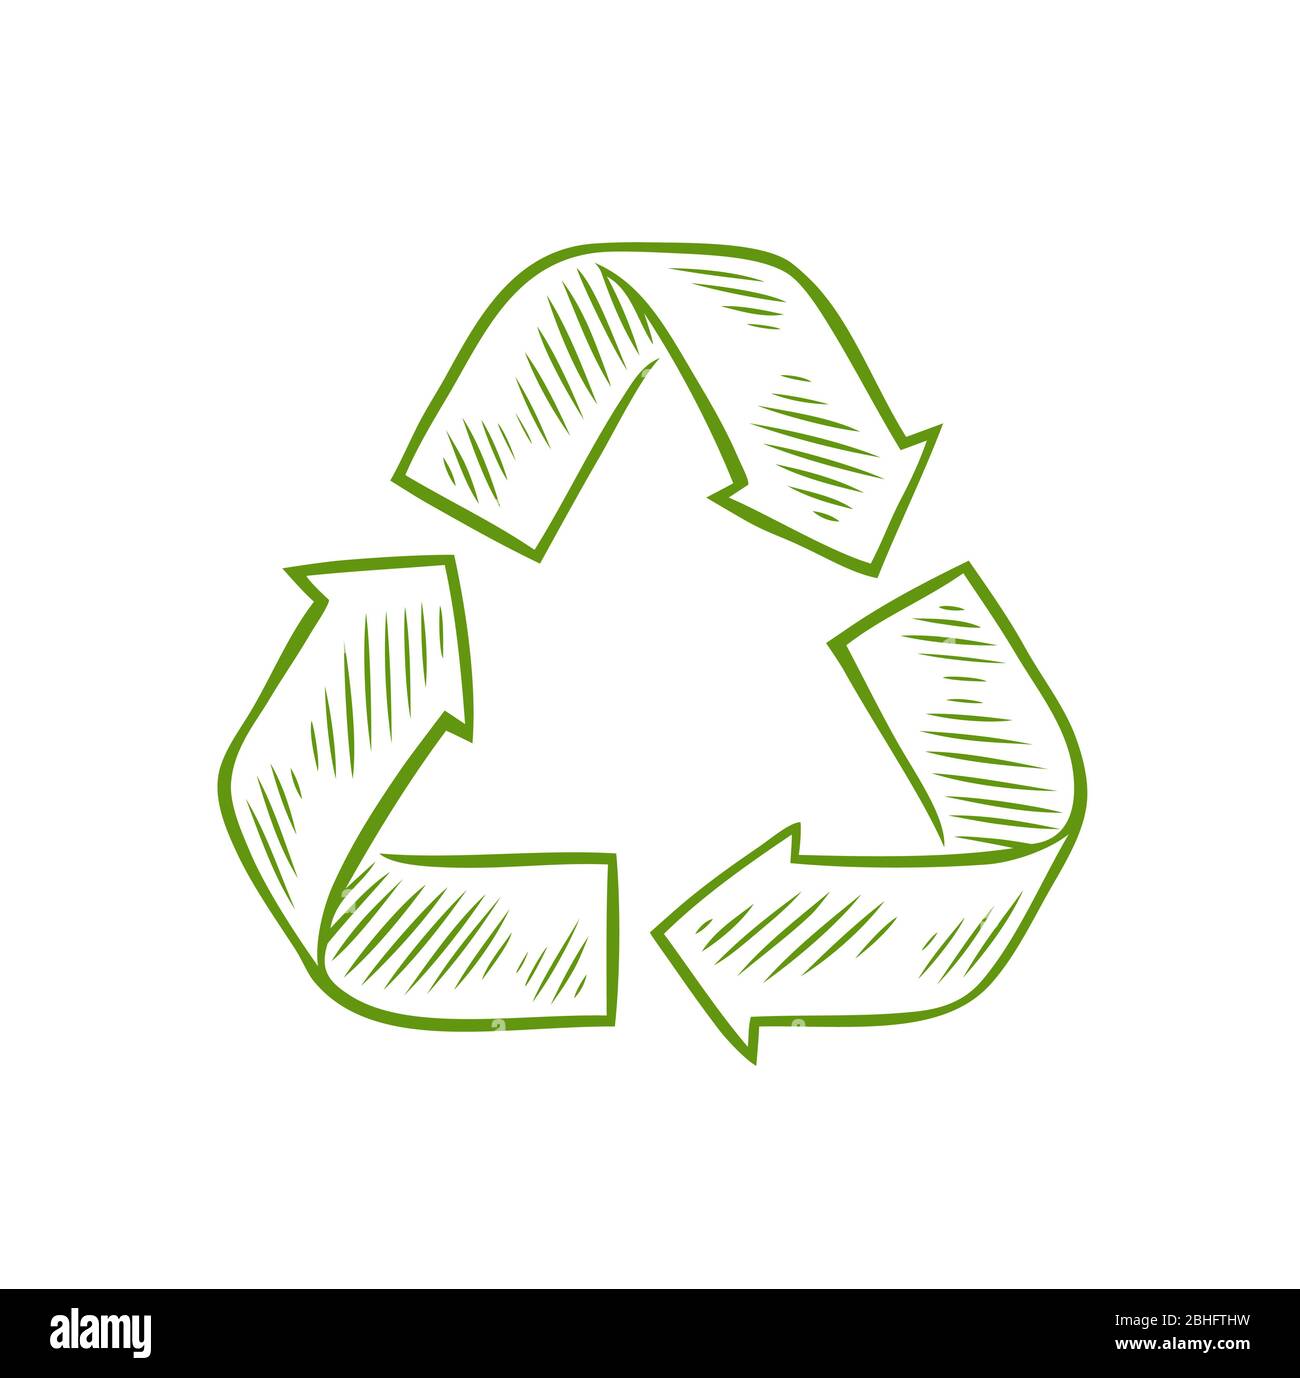 Zeichenskizze recyceln. Vektorgrafik Abfallrecycling Stock Vektor